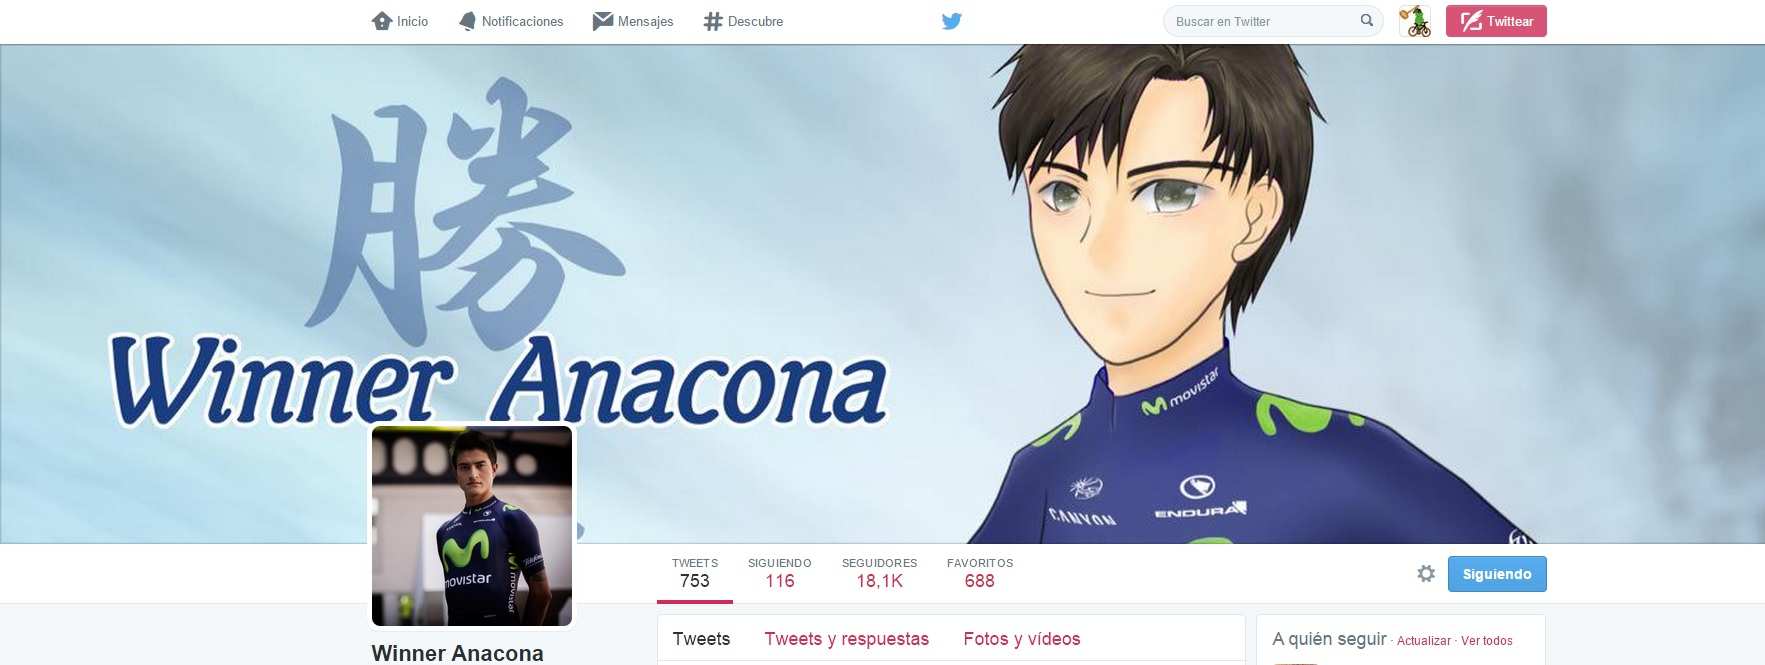 perfil de twitter de Winner Anacona